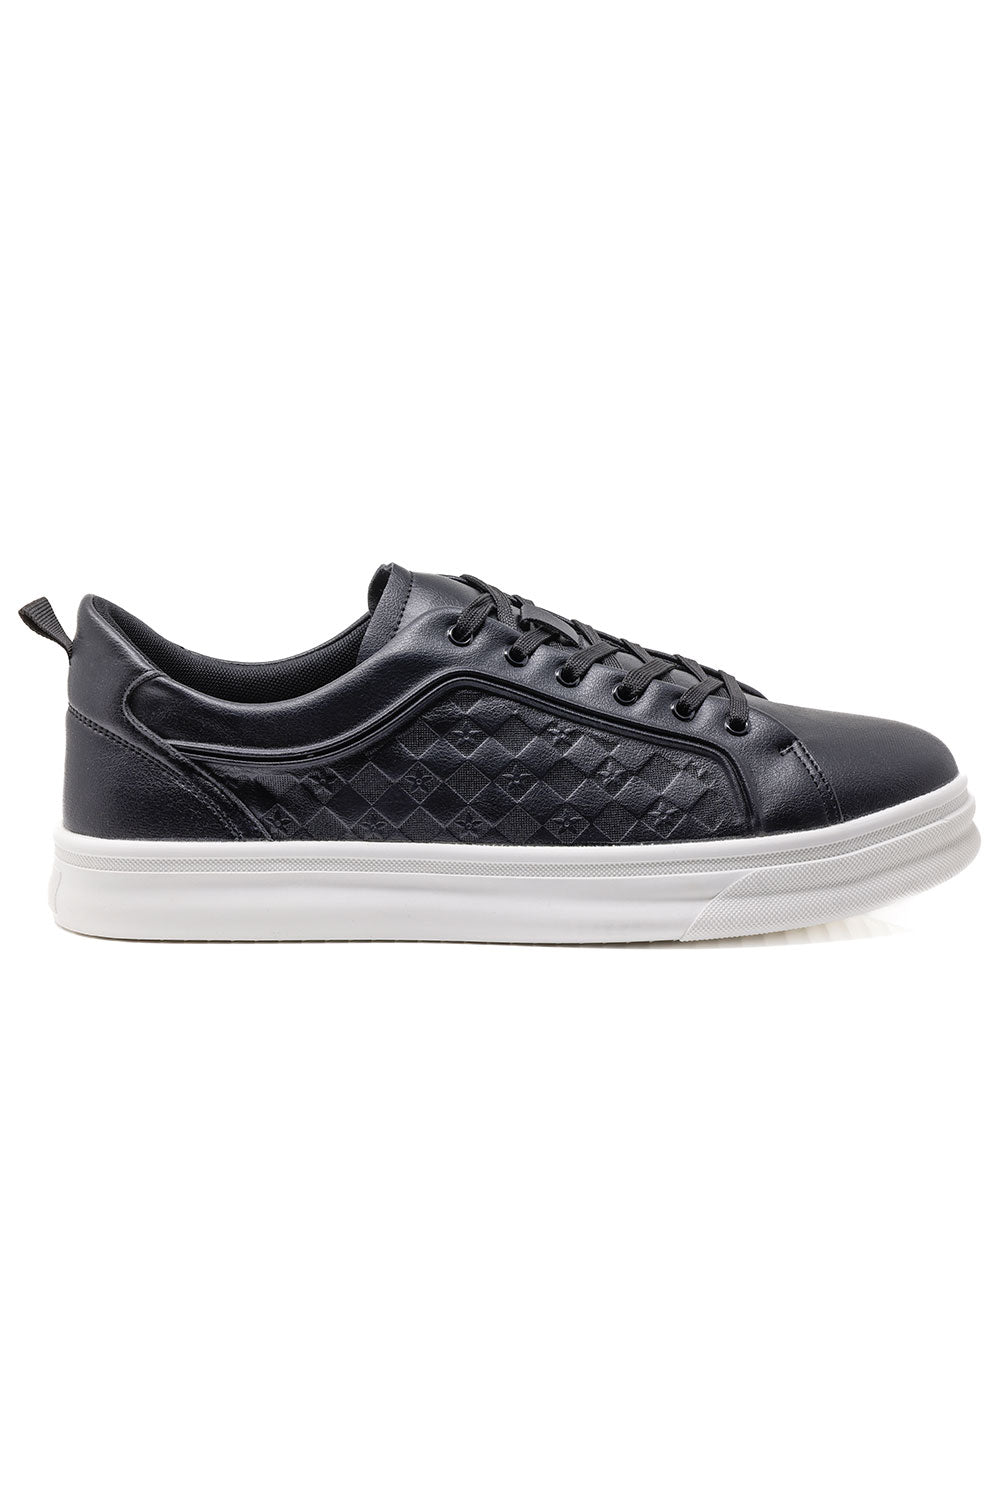 Barabas Men's Checkered Pattern Premium Leather Sneakers 4SK04 Black